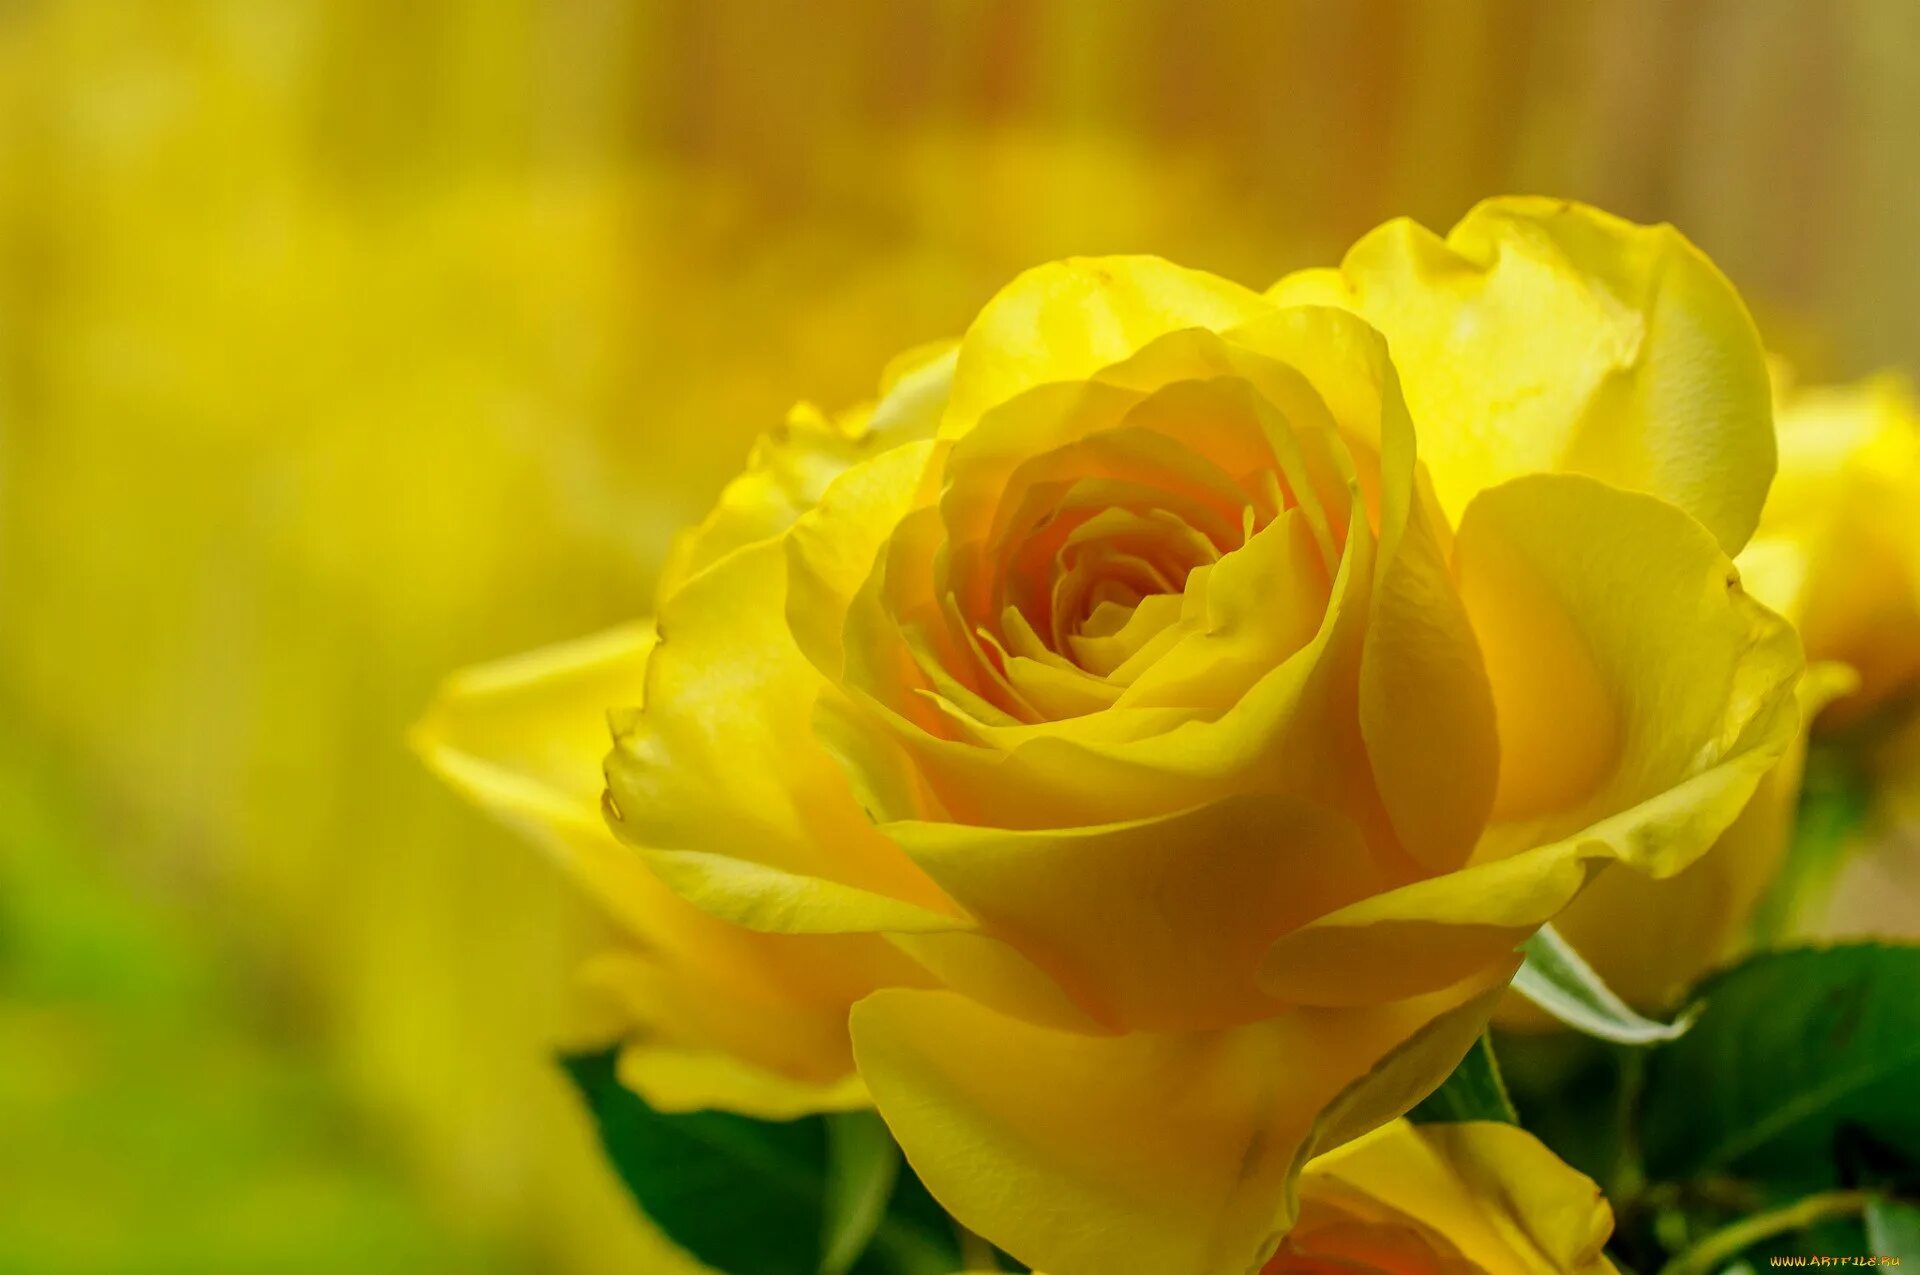 Ярко желтыми цветами. Желтая роза Брайтон. Желтые розы Ilios. Бледно желтые розы. Роза Наоми желтая.